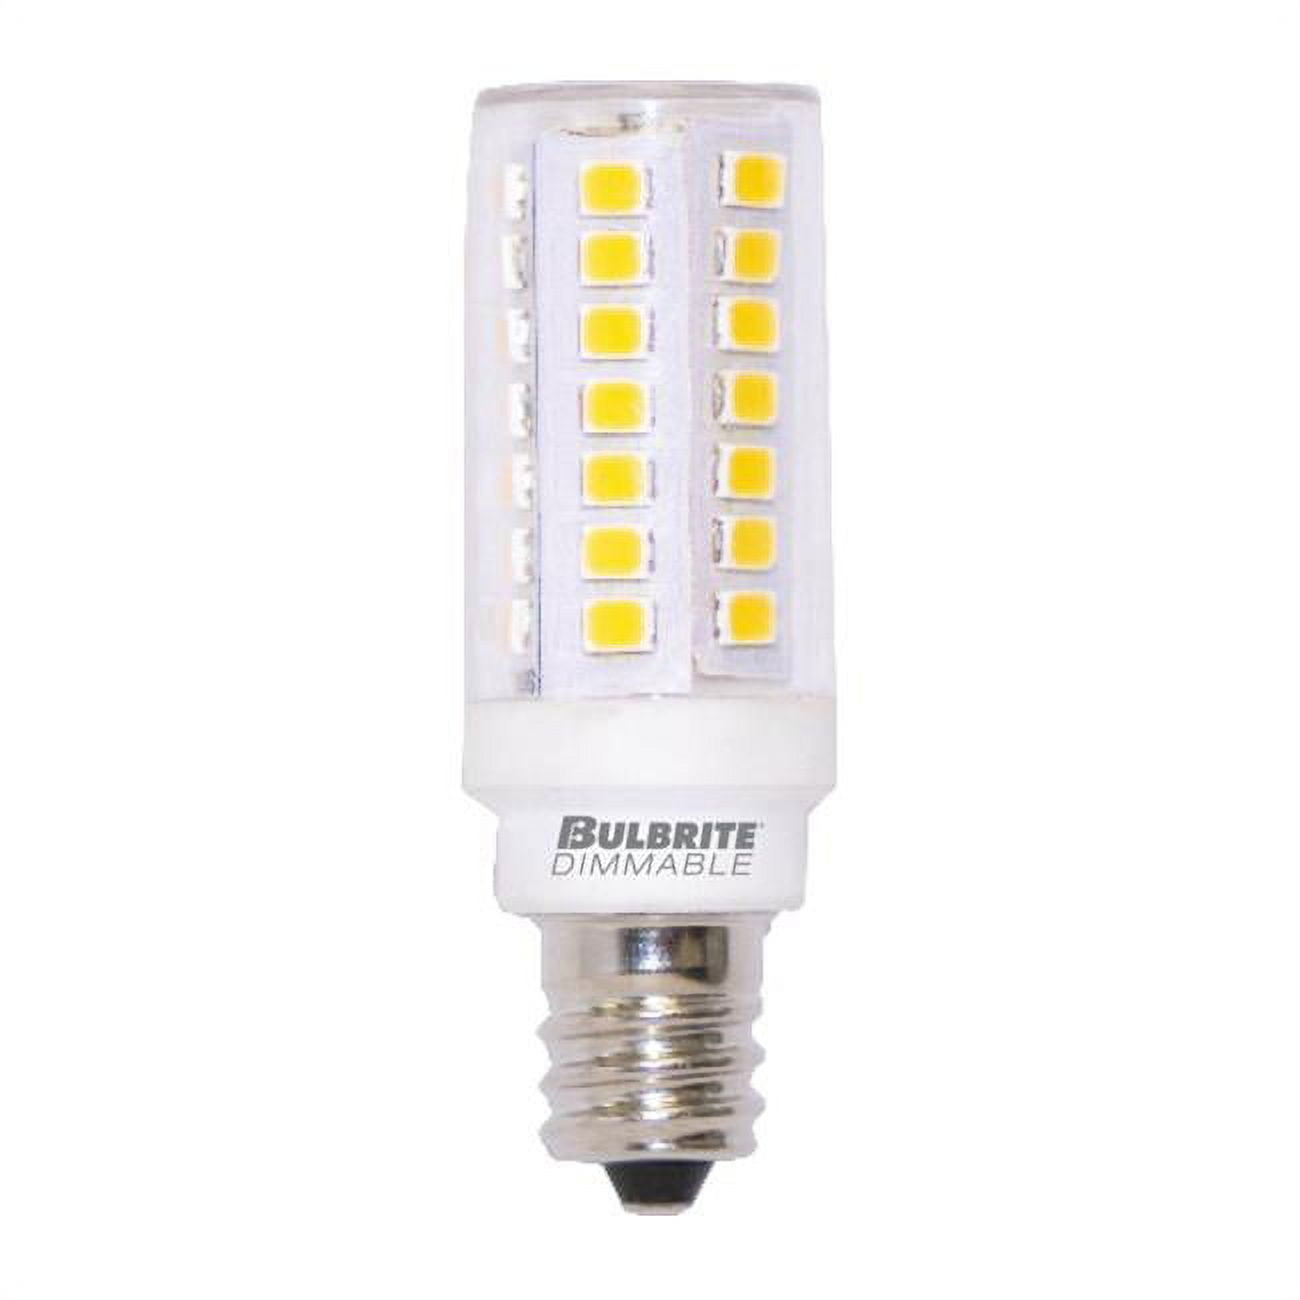 Picture of Bulbrite Pack of (2) 5 Watt 120V Dimmable Clear T6 LED Mini Light Bulbs with Mini-Candelabra (E11) Base  2700K Warm White Light  550 Lumens